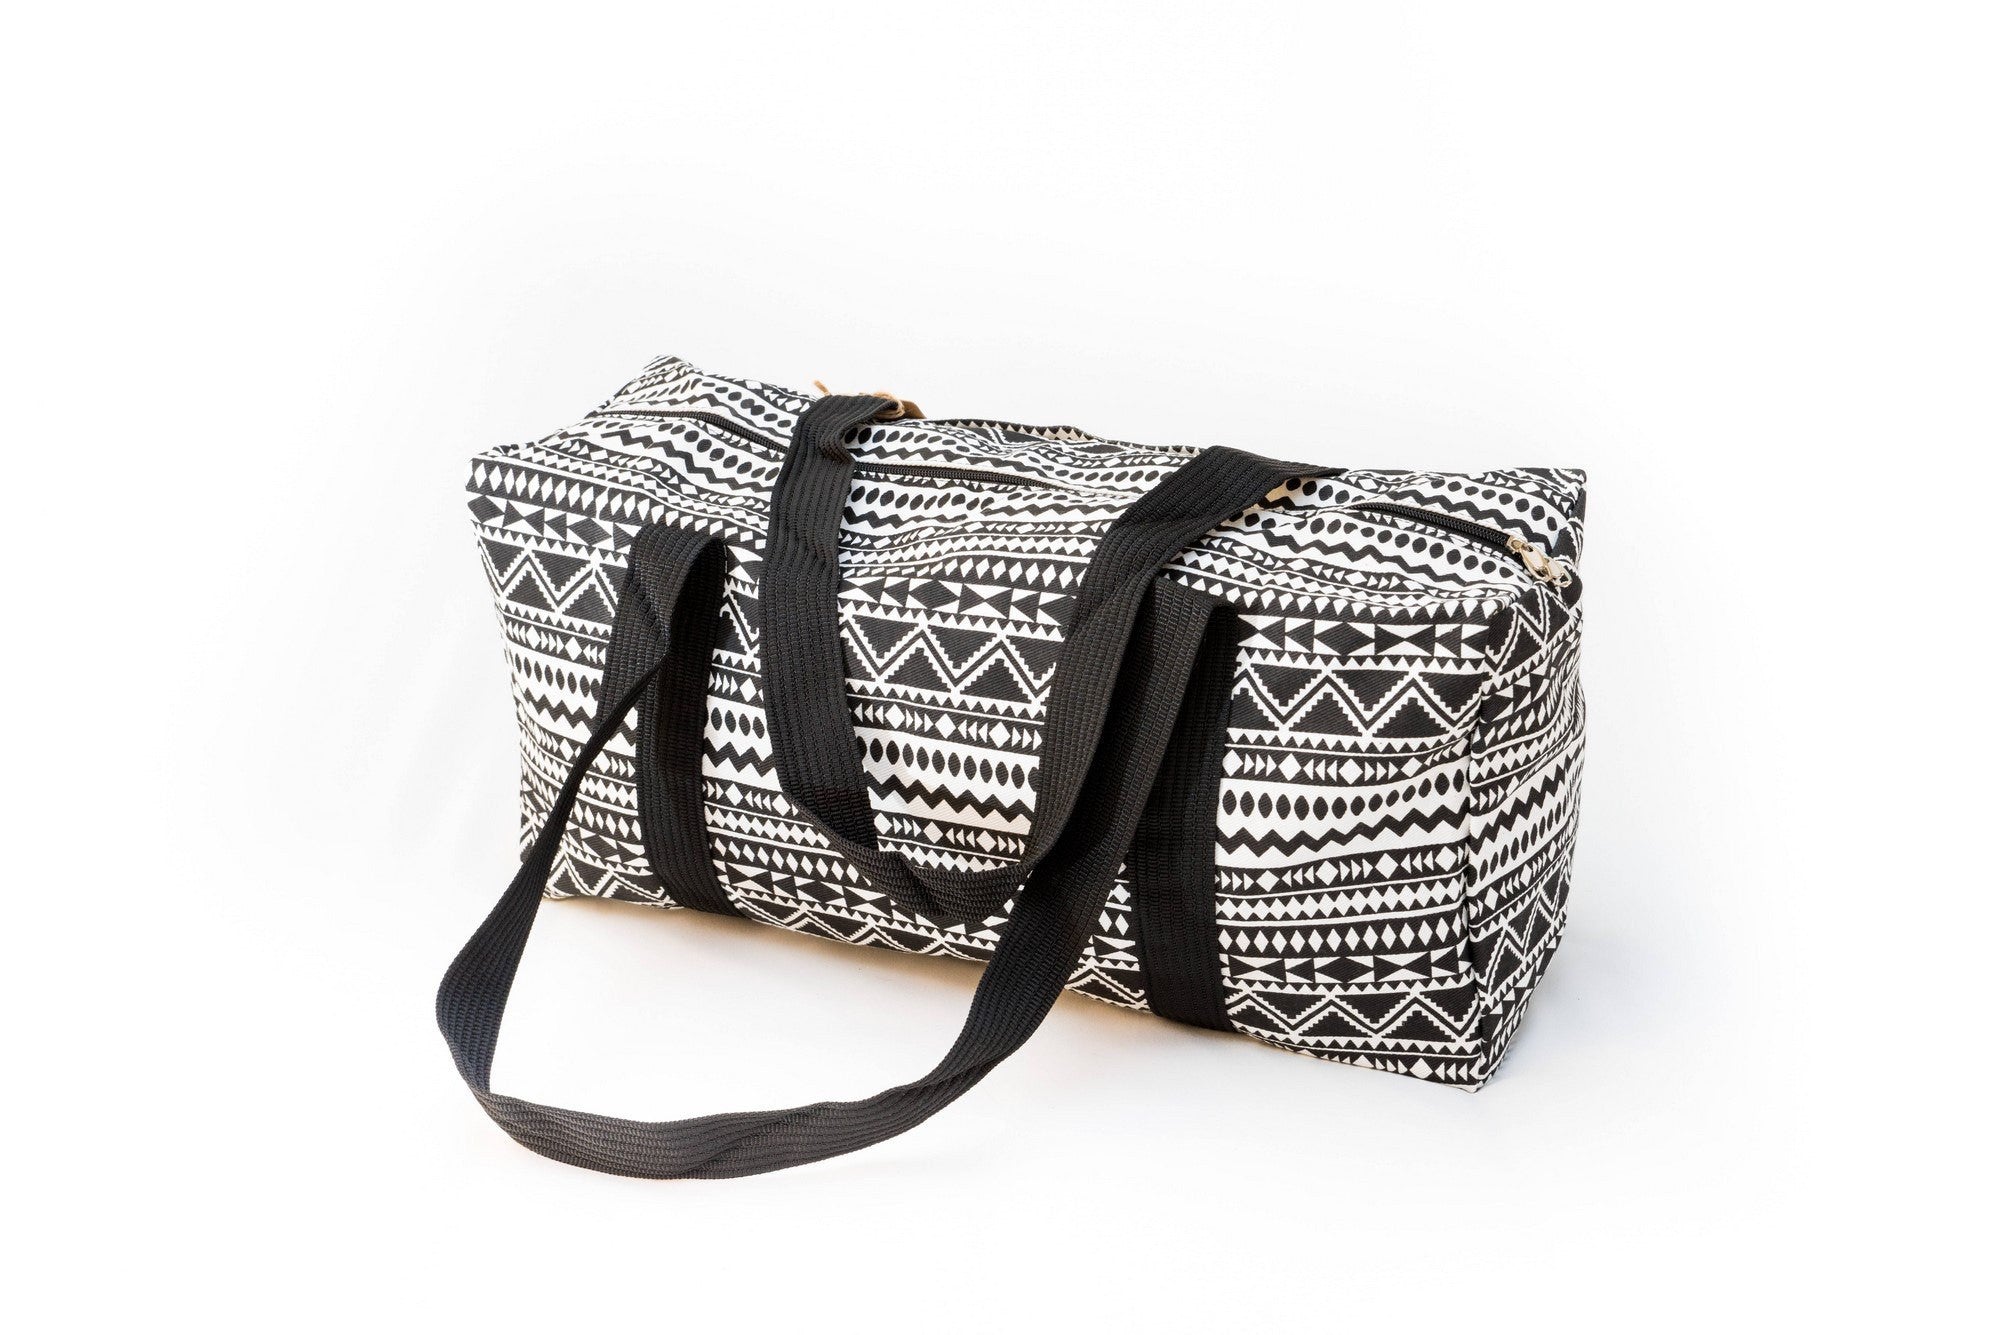 Canvas Duffel Bag - Canvas Duffel Bag - Gym Or Sports Bag, Carry-On Travel Luggage By Lemur Bags (Aztec Tribal)